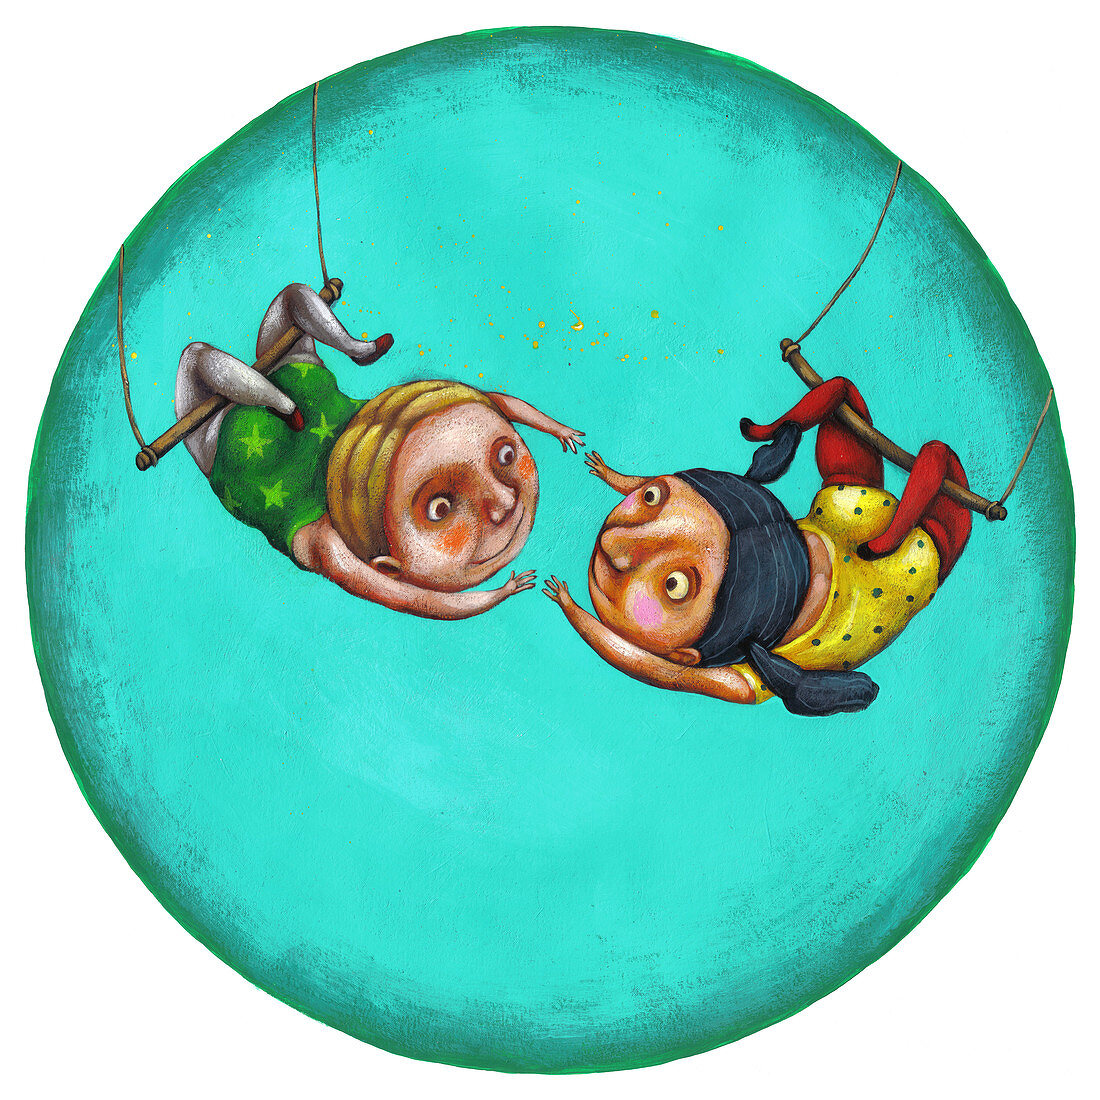 Illustration of children on trapeze